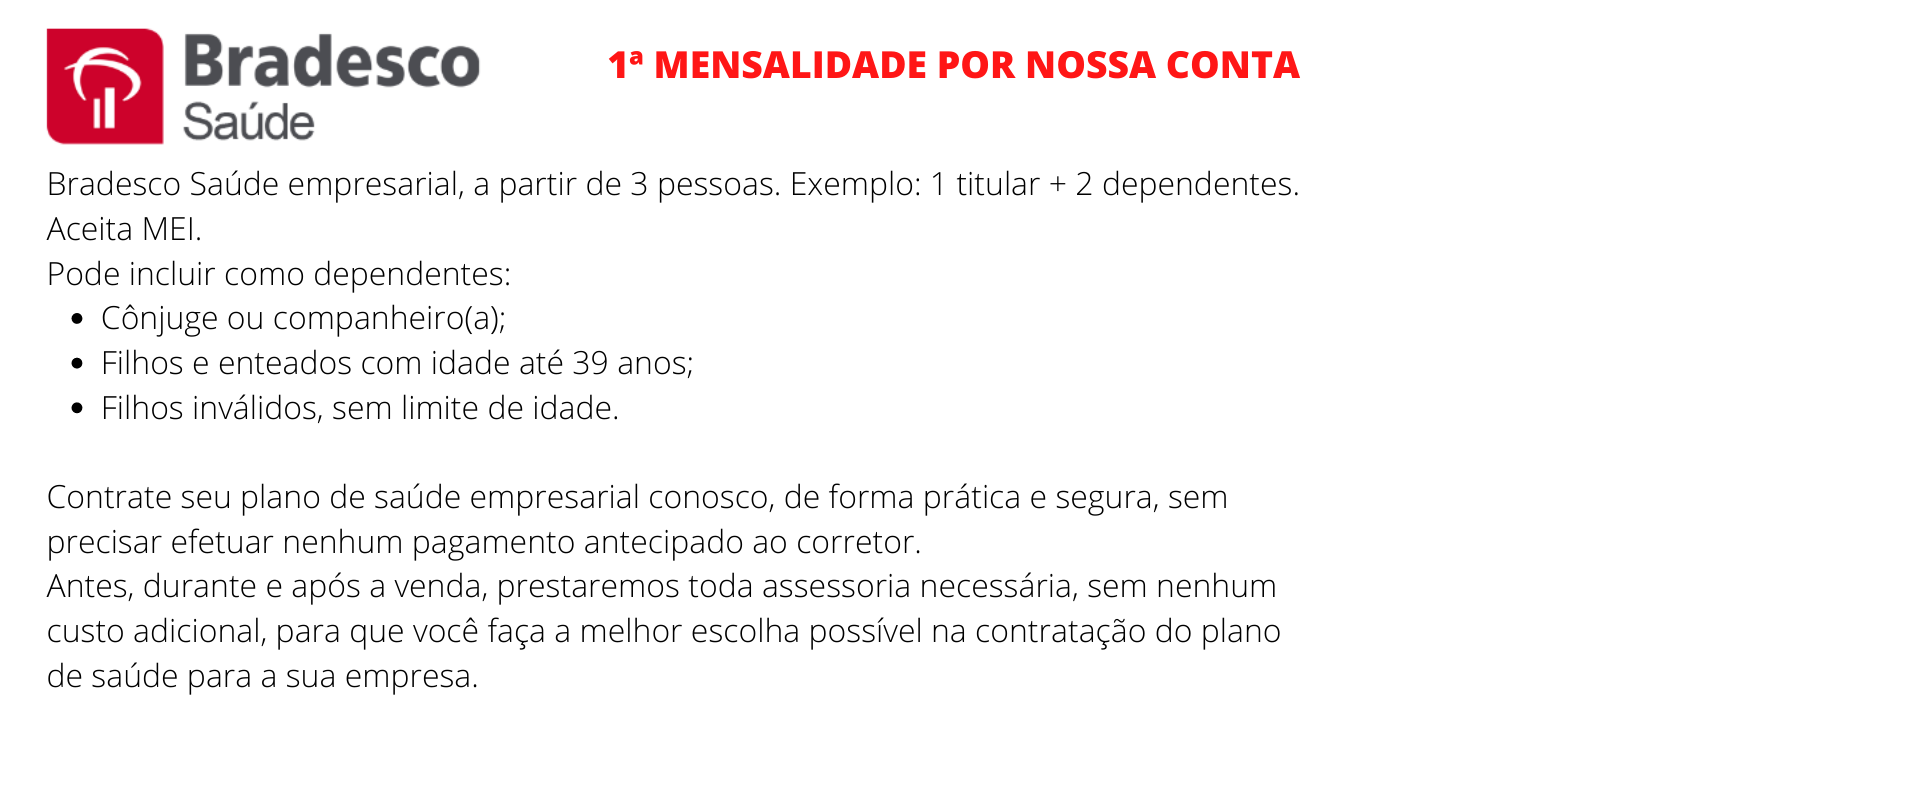 Bradesco Saúde Empresarial - Águas Lindas de Goiás  